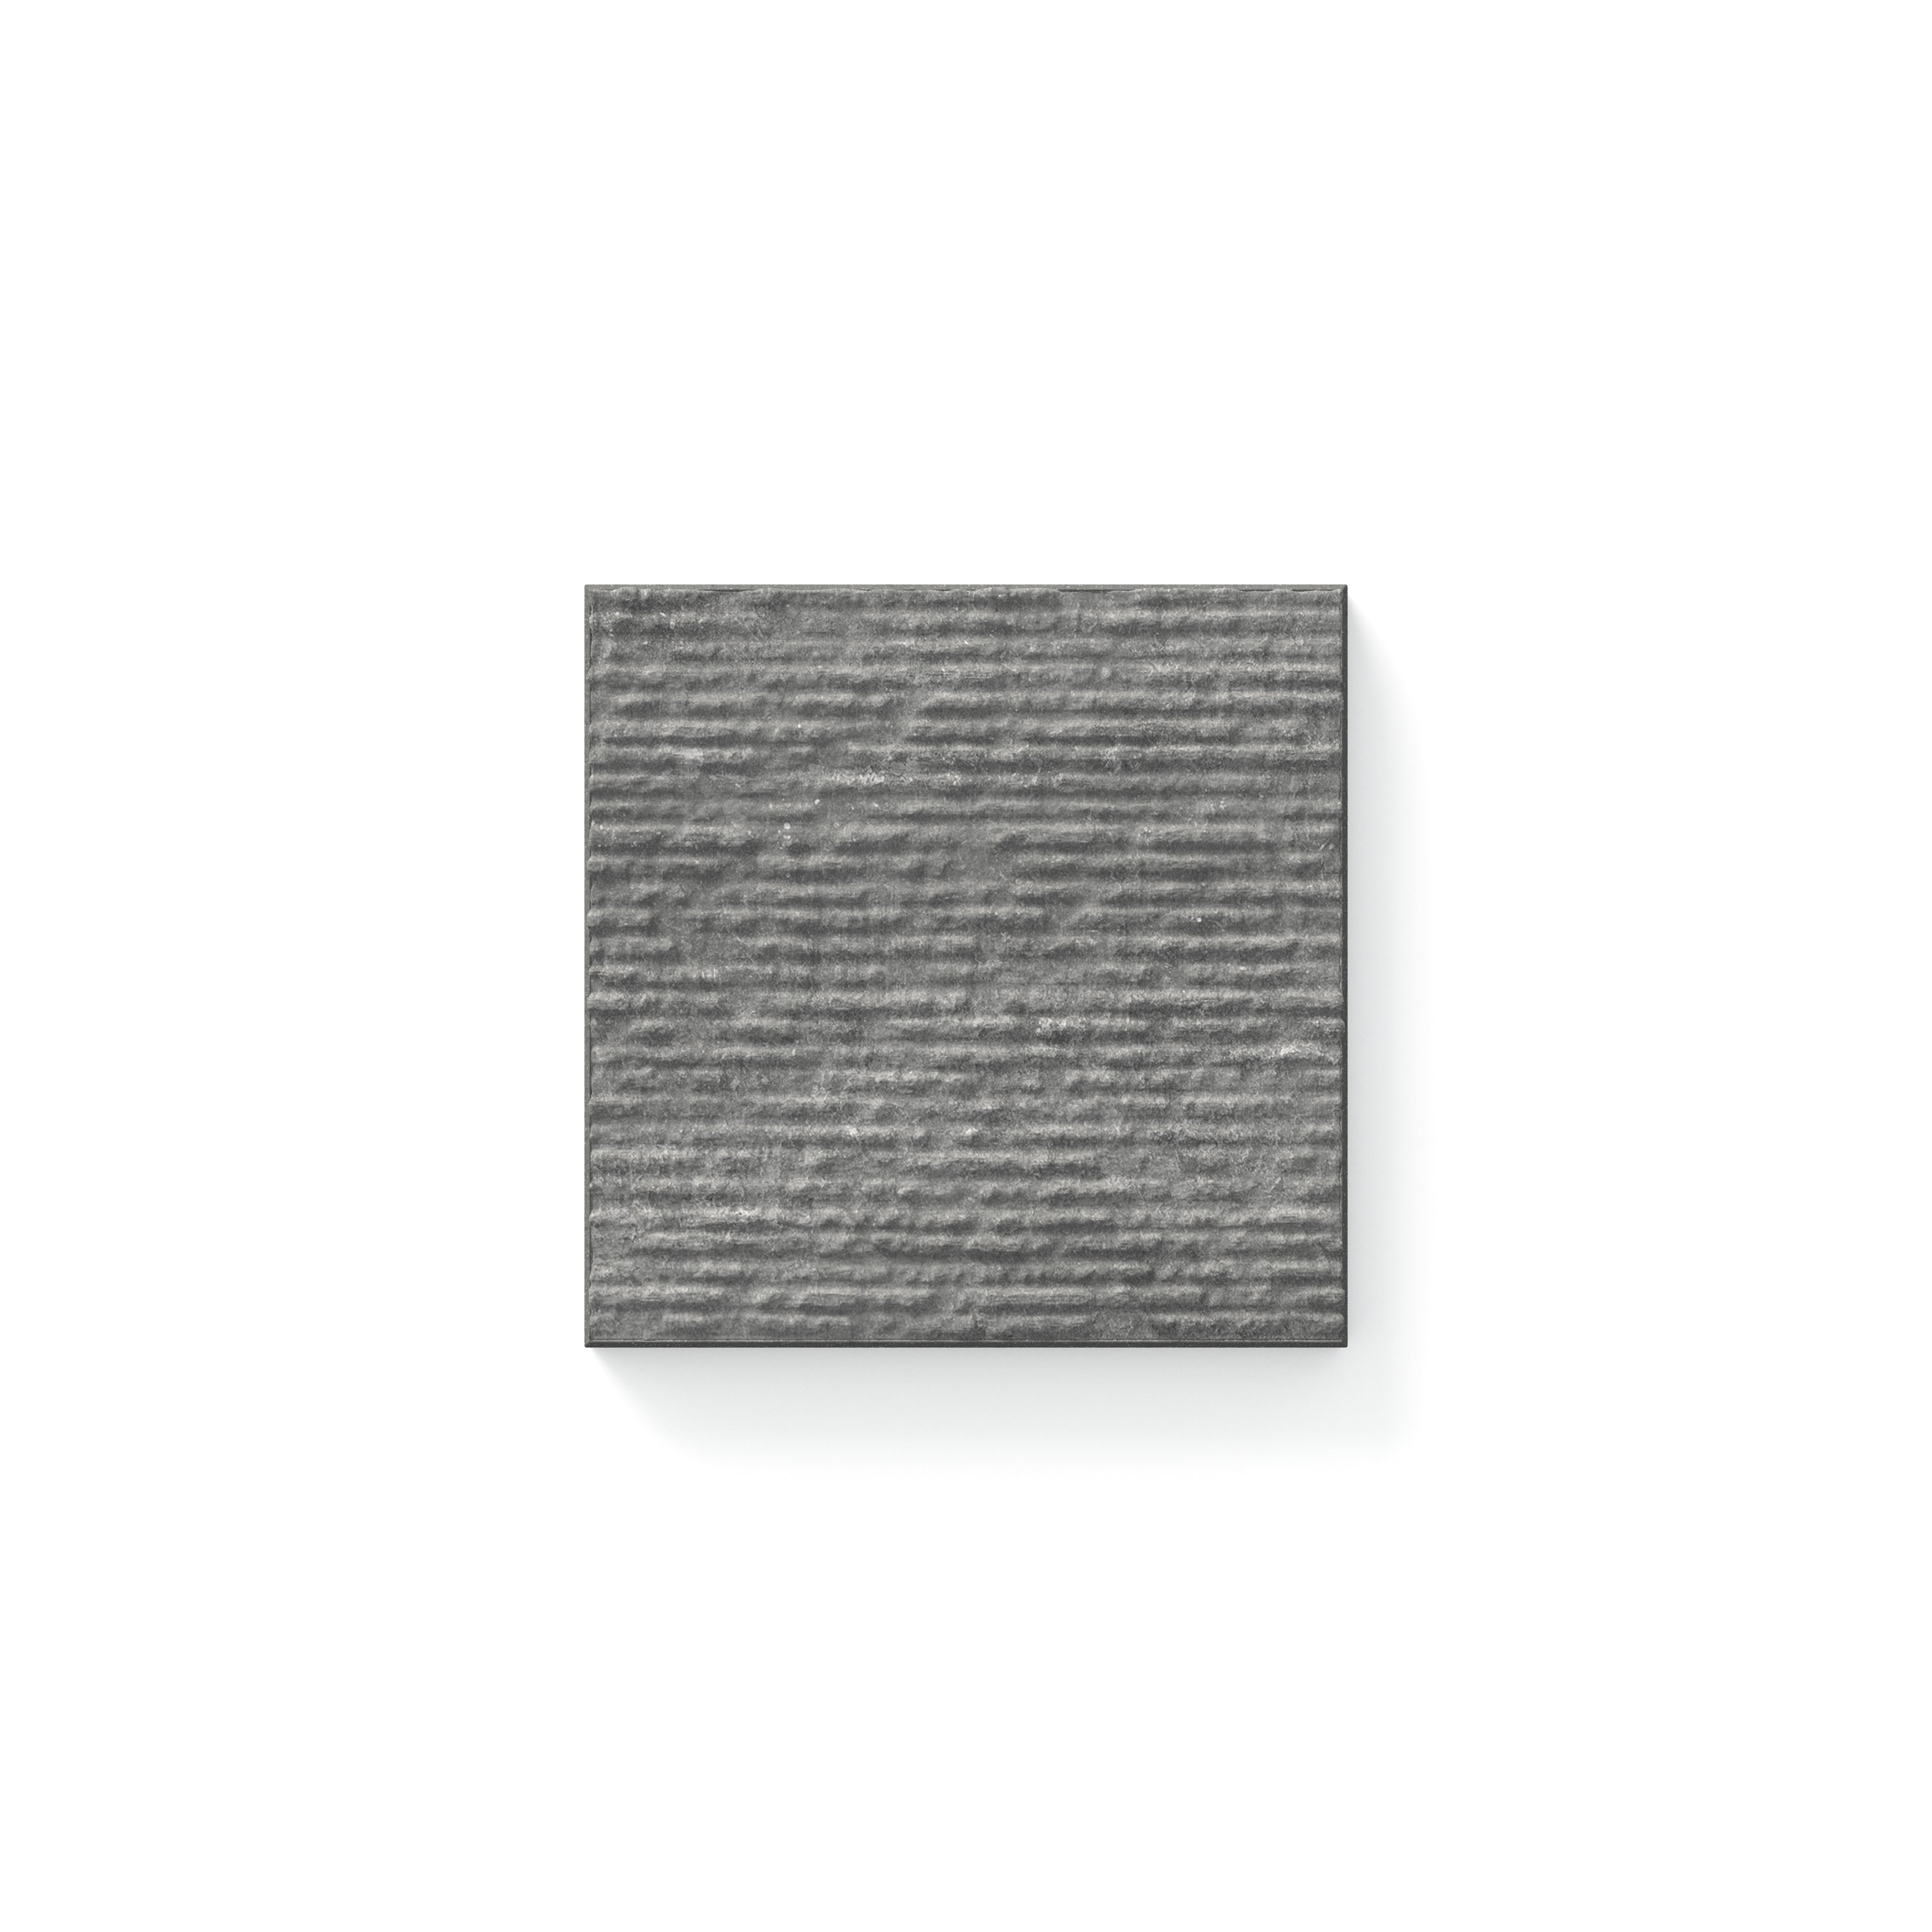 Wren Chiseled Charcoal 4x4 Tile Sample